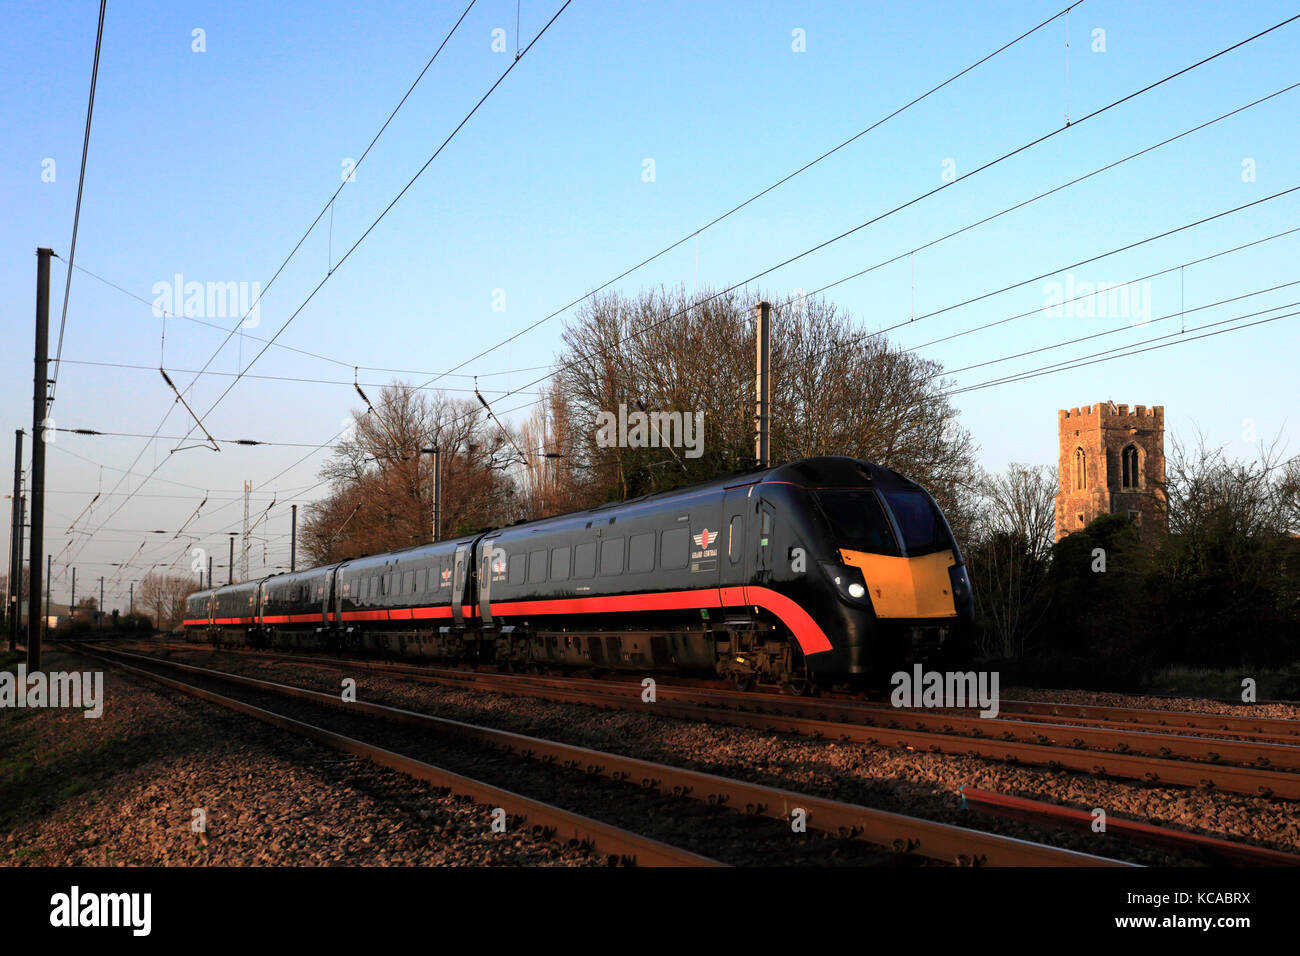 180 Zephyr class, Grand Central Trains, Offord Cluny village, East Coast Main Line Railway, Peterborough, Cambridgeshire, England, UK Stock Photo